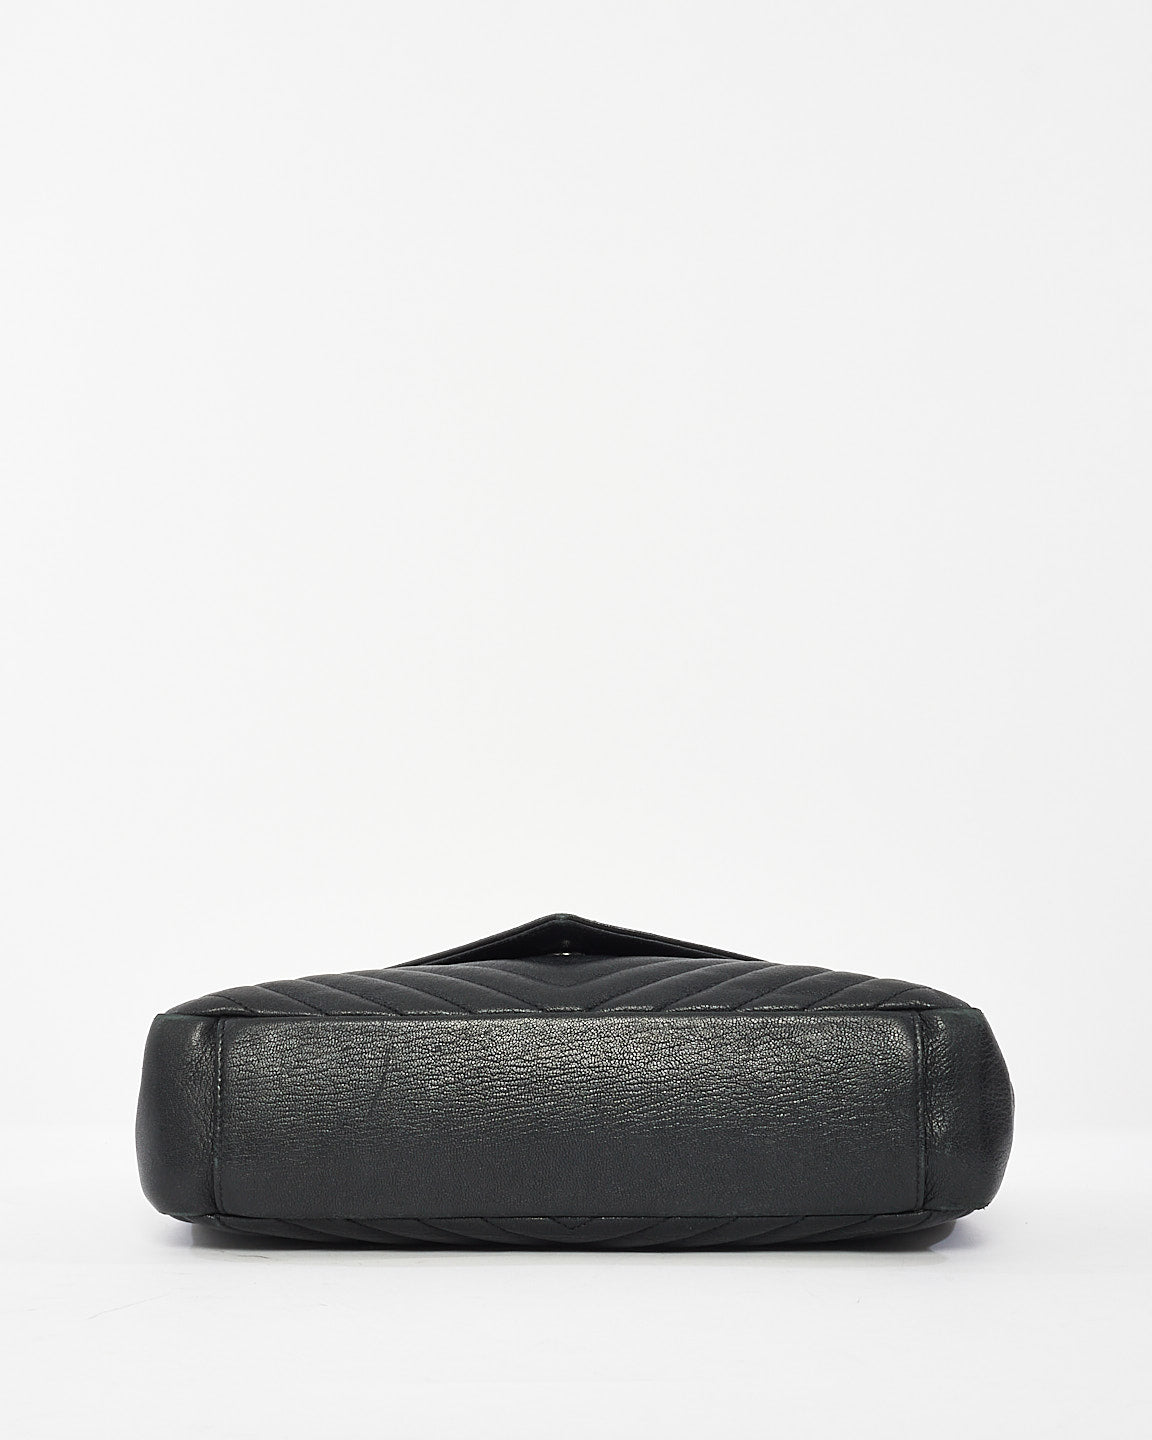 Saint Laurent Black Quilted Leather Large College Bag